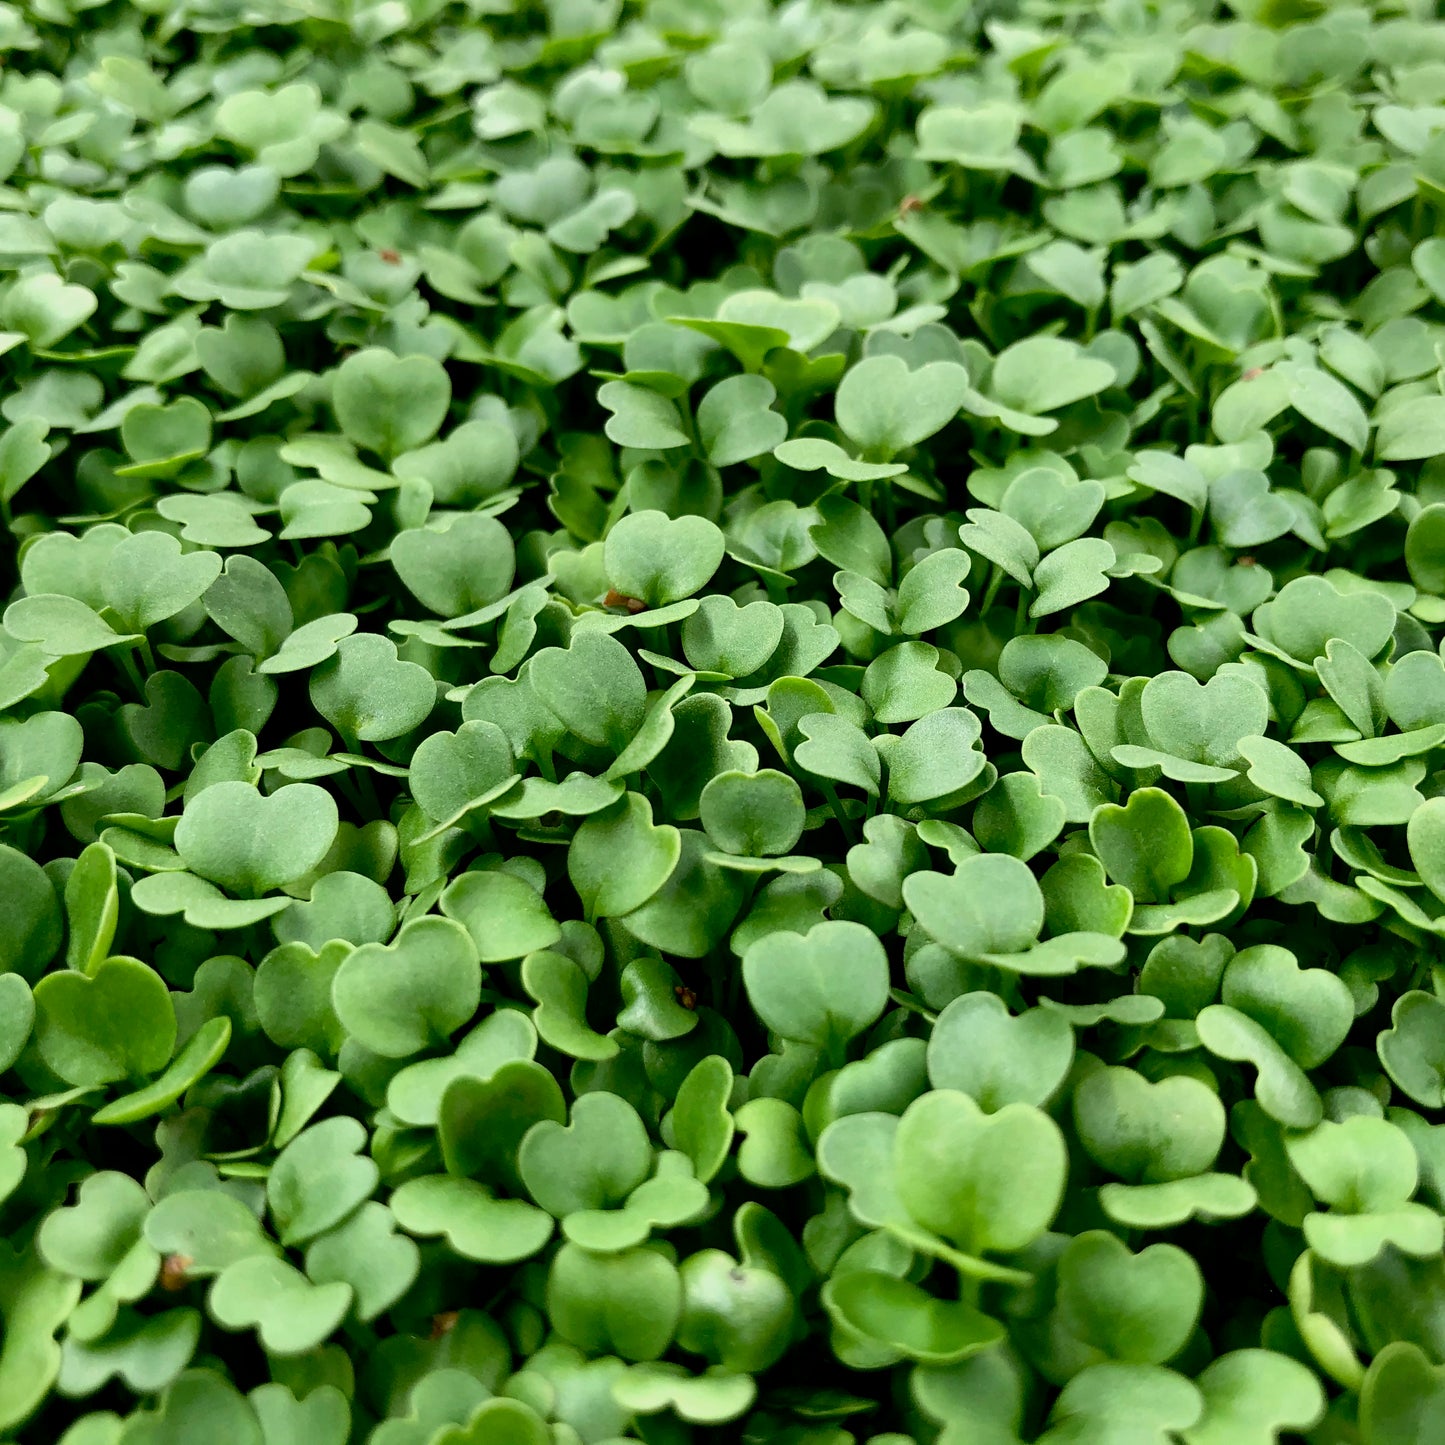 Arugula microgreens have tiny green heart shaped leaves.